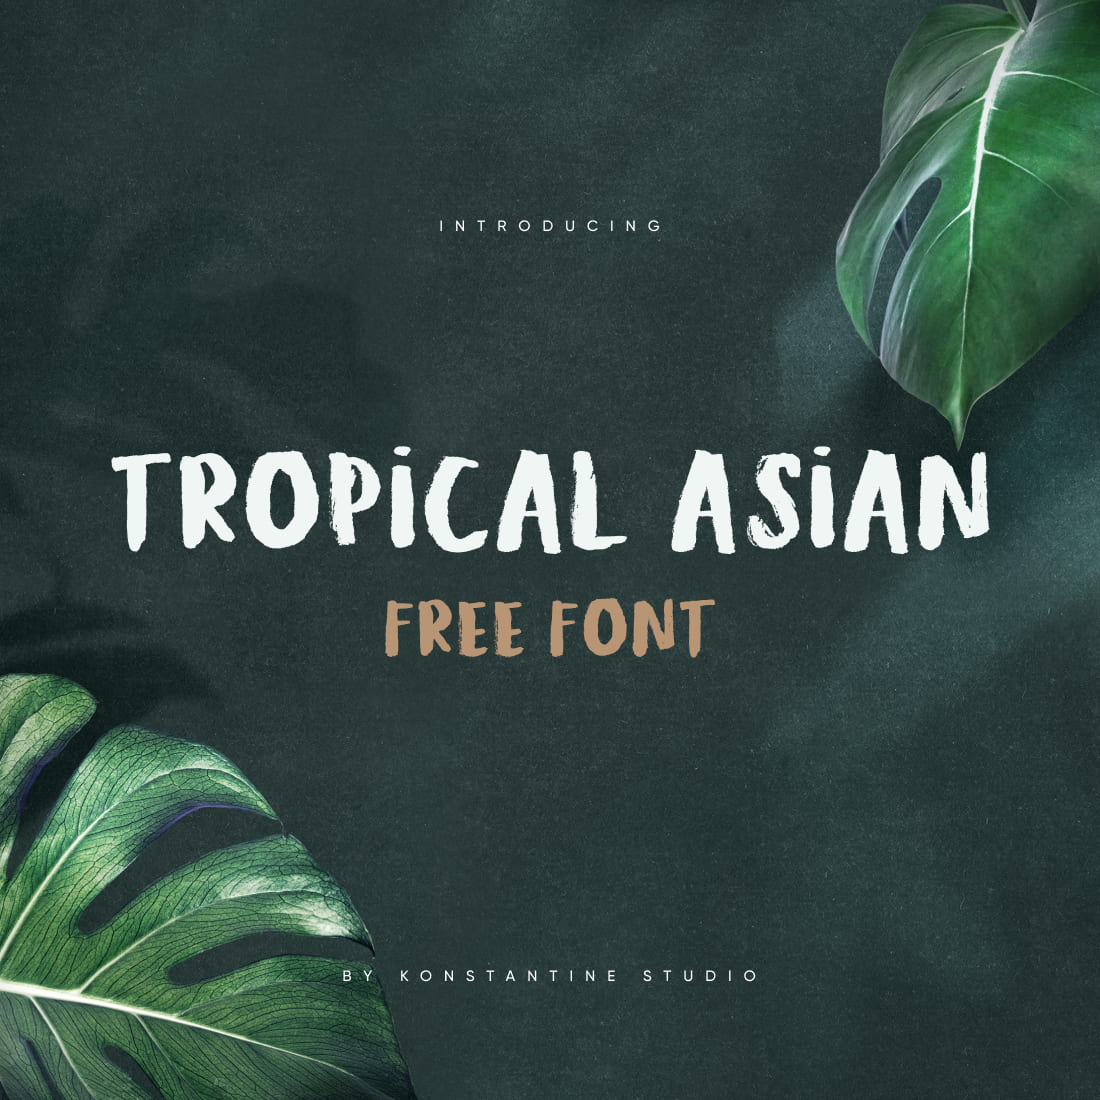 Tropical Asian Free Font Awesome MasterBundles Main Cover.